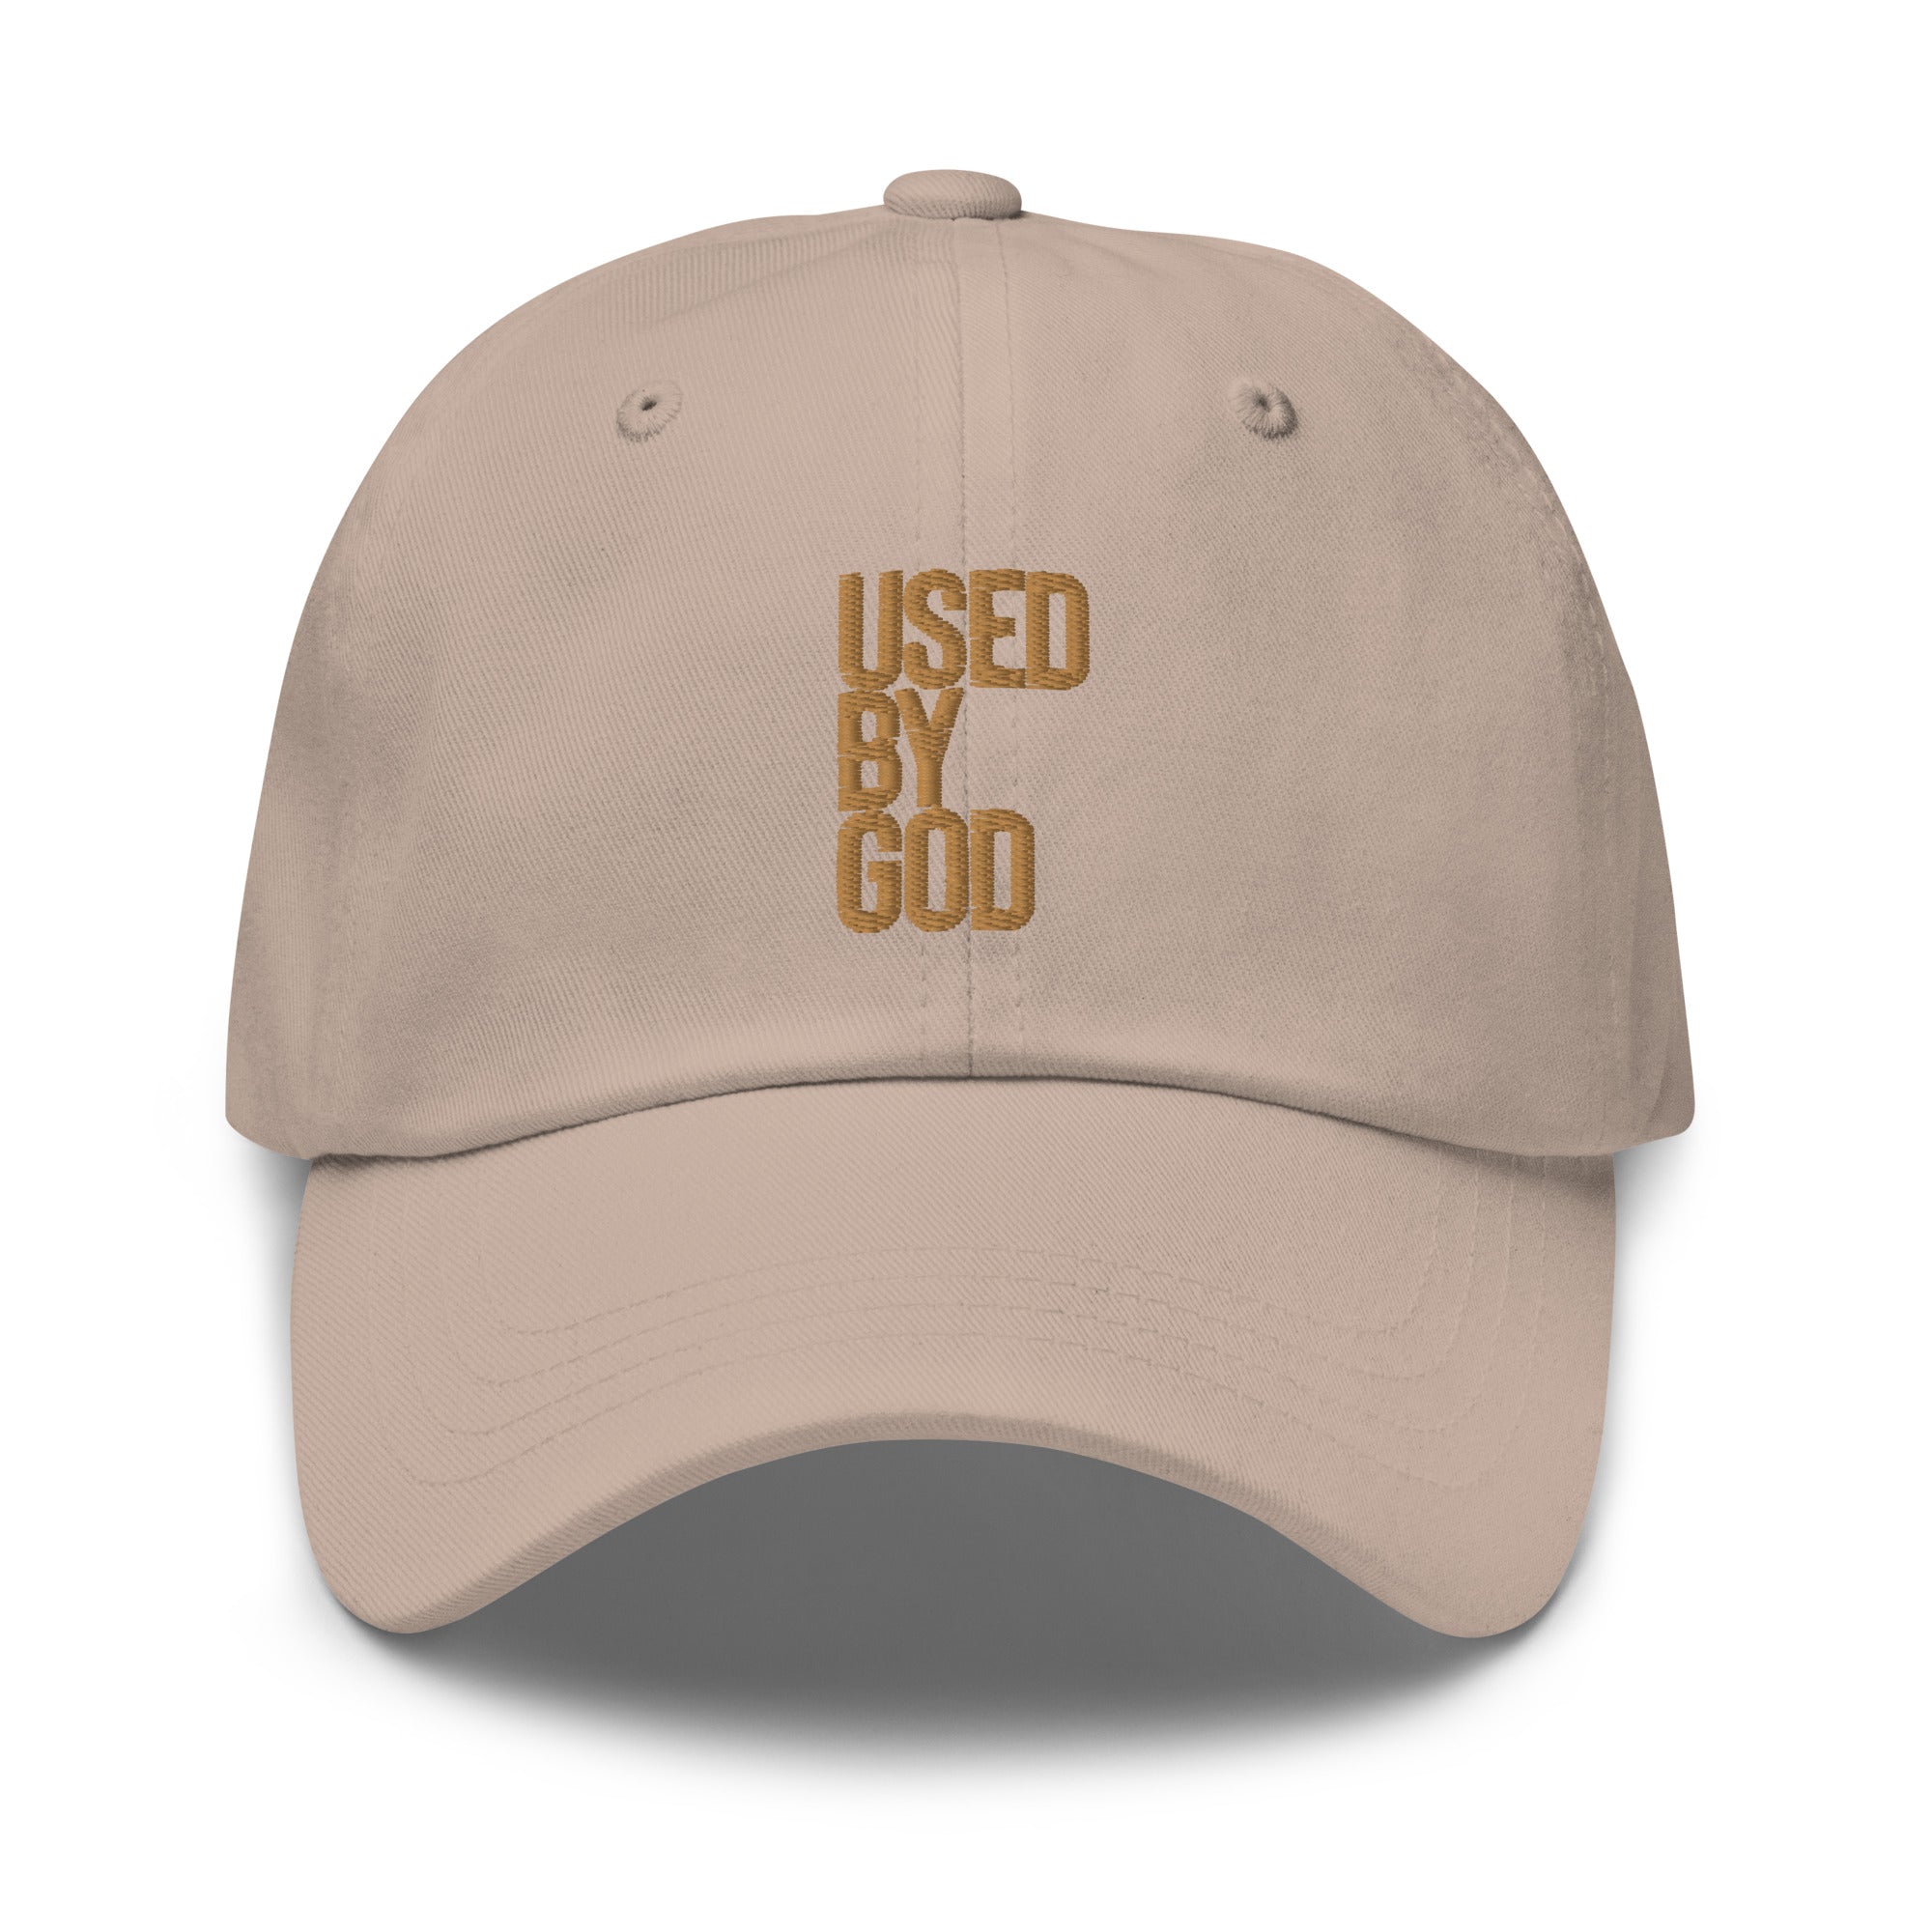 UBG Logo Caramel Dad Hat